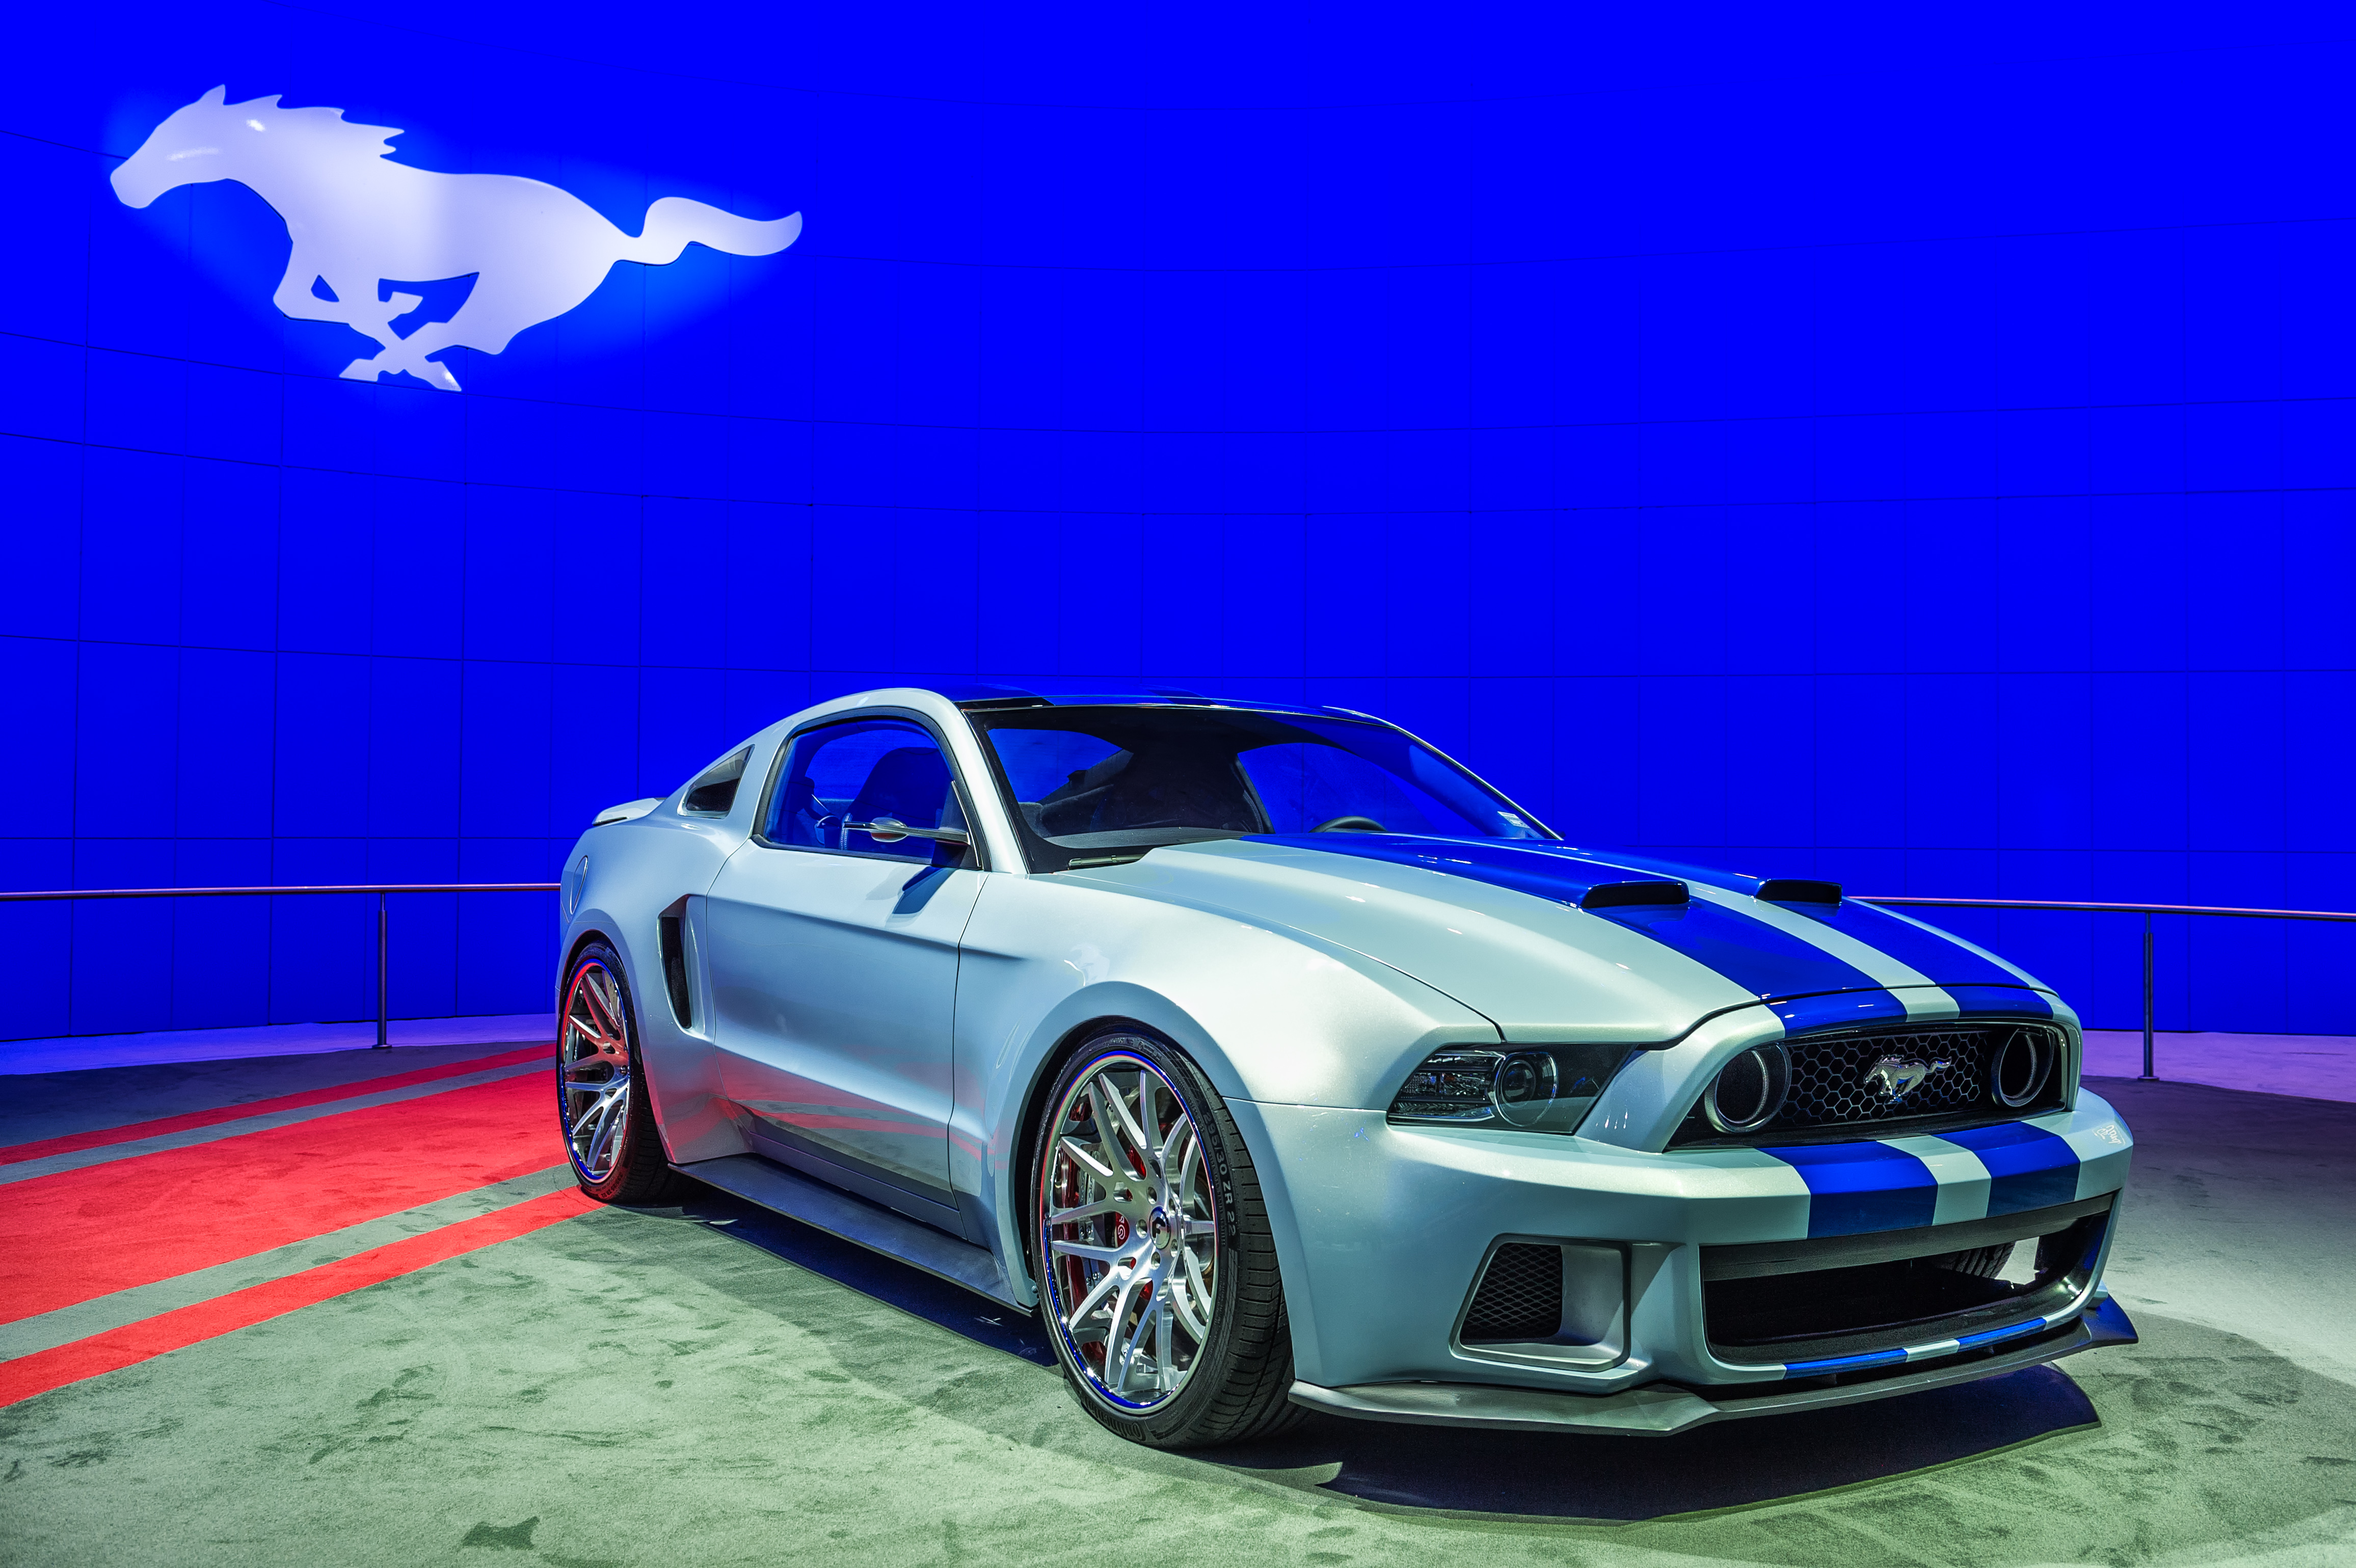 Mustang Badg E Need For Speed Qui Sera L Une Des Vedettes Du Film